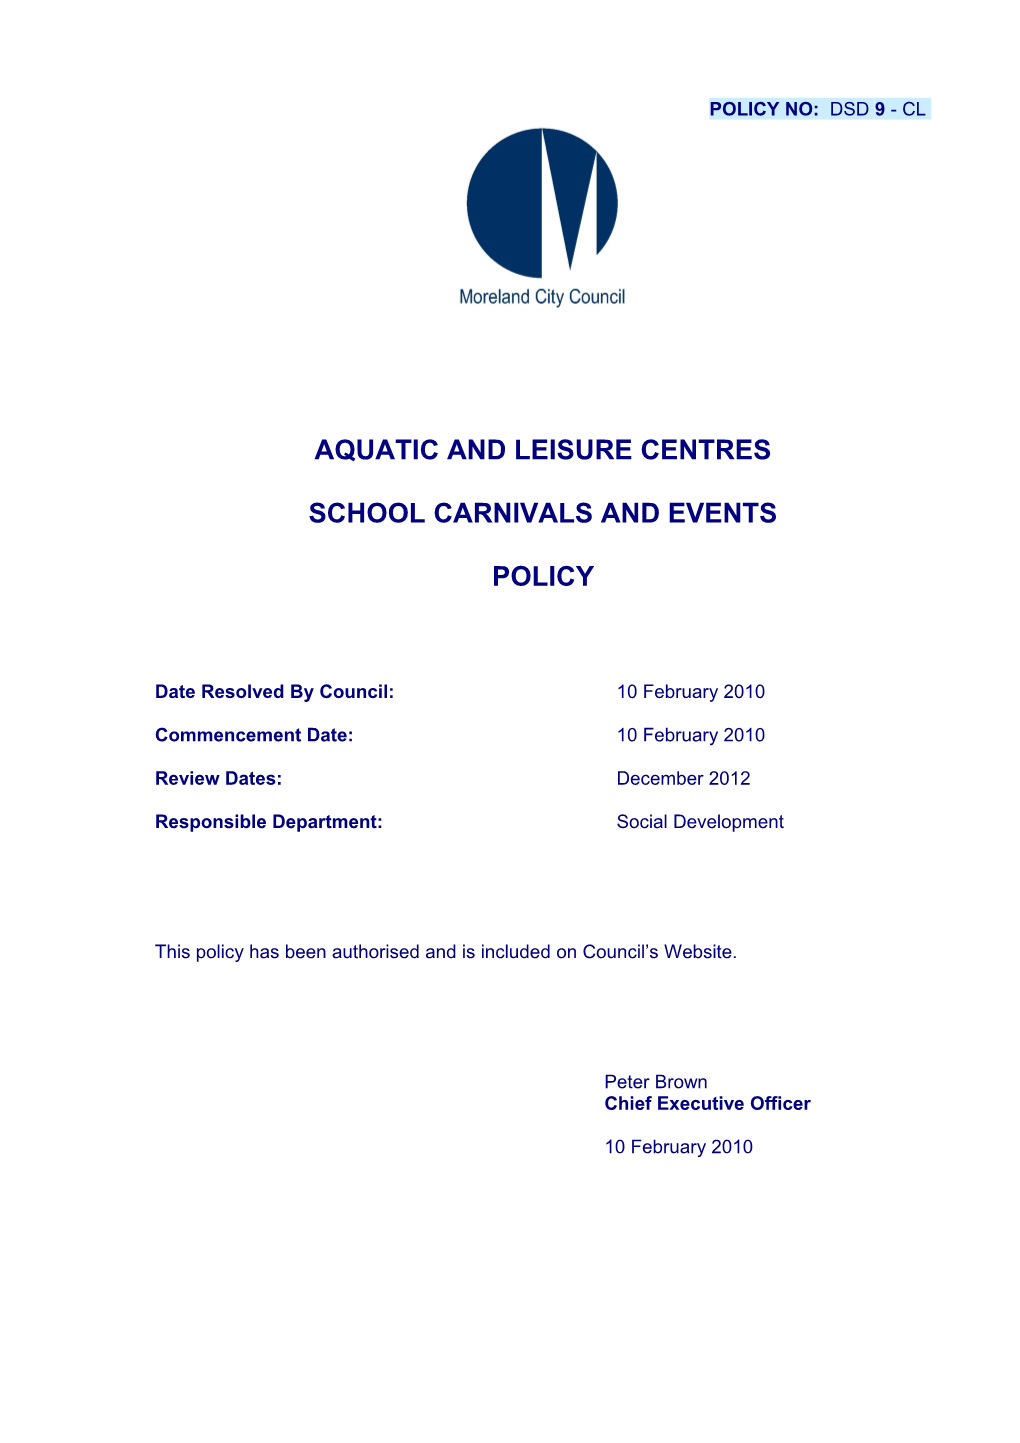 Aquatic and Leisure Centres